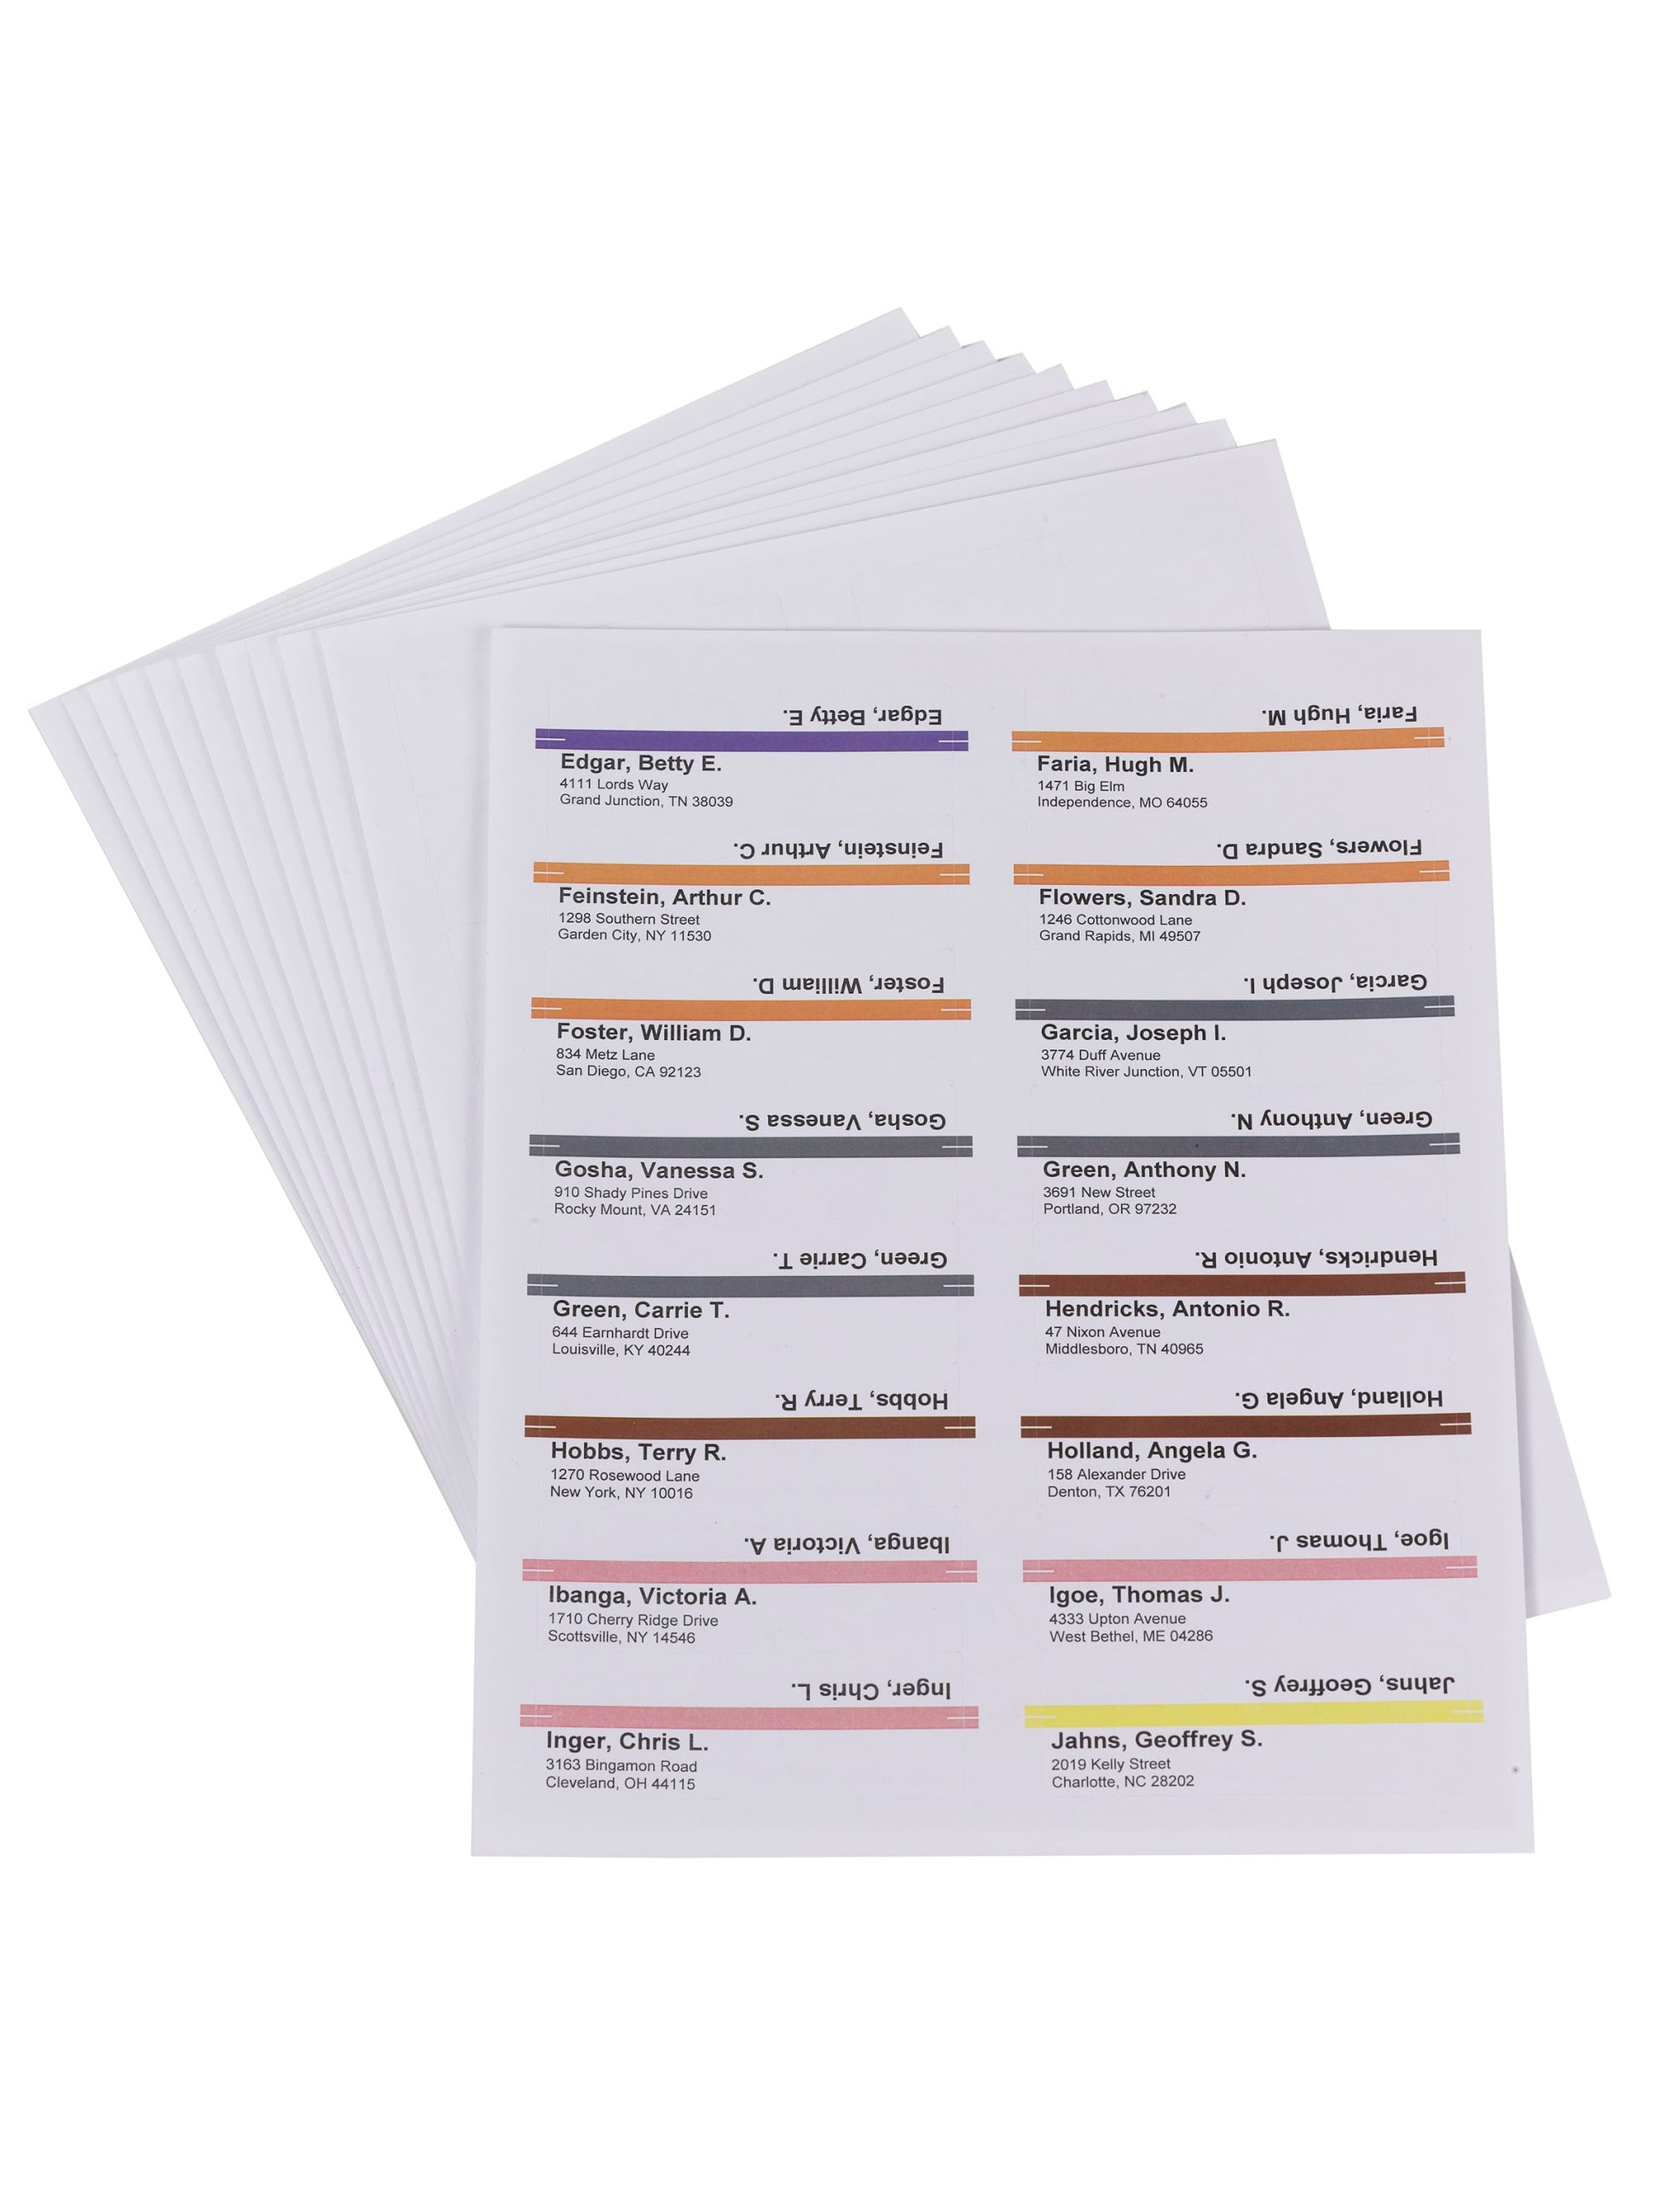 Viewables® hanging File Folder Label Refills, White Color, N/A Size, Set of 1, 086486649155